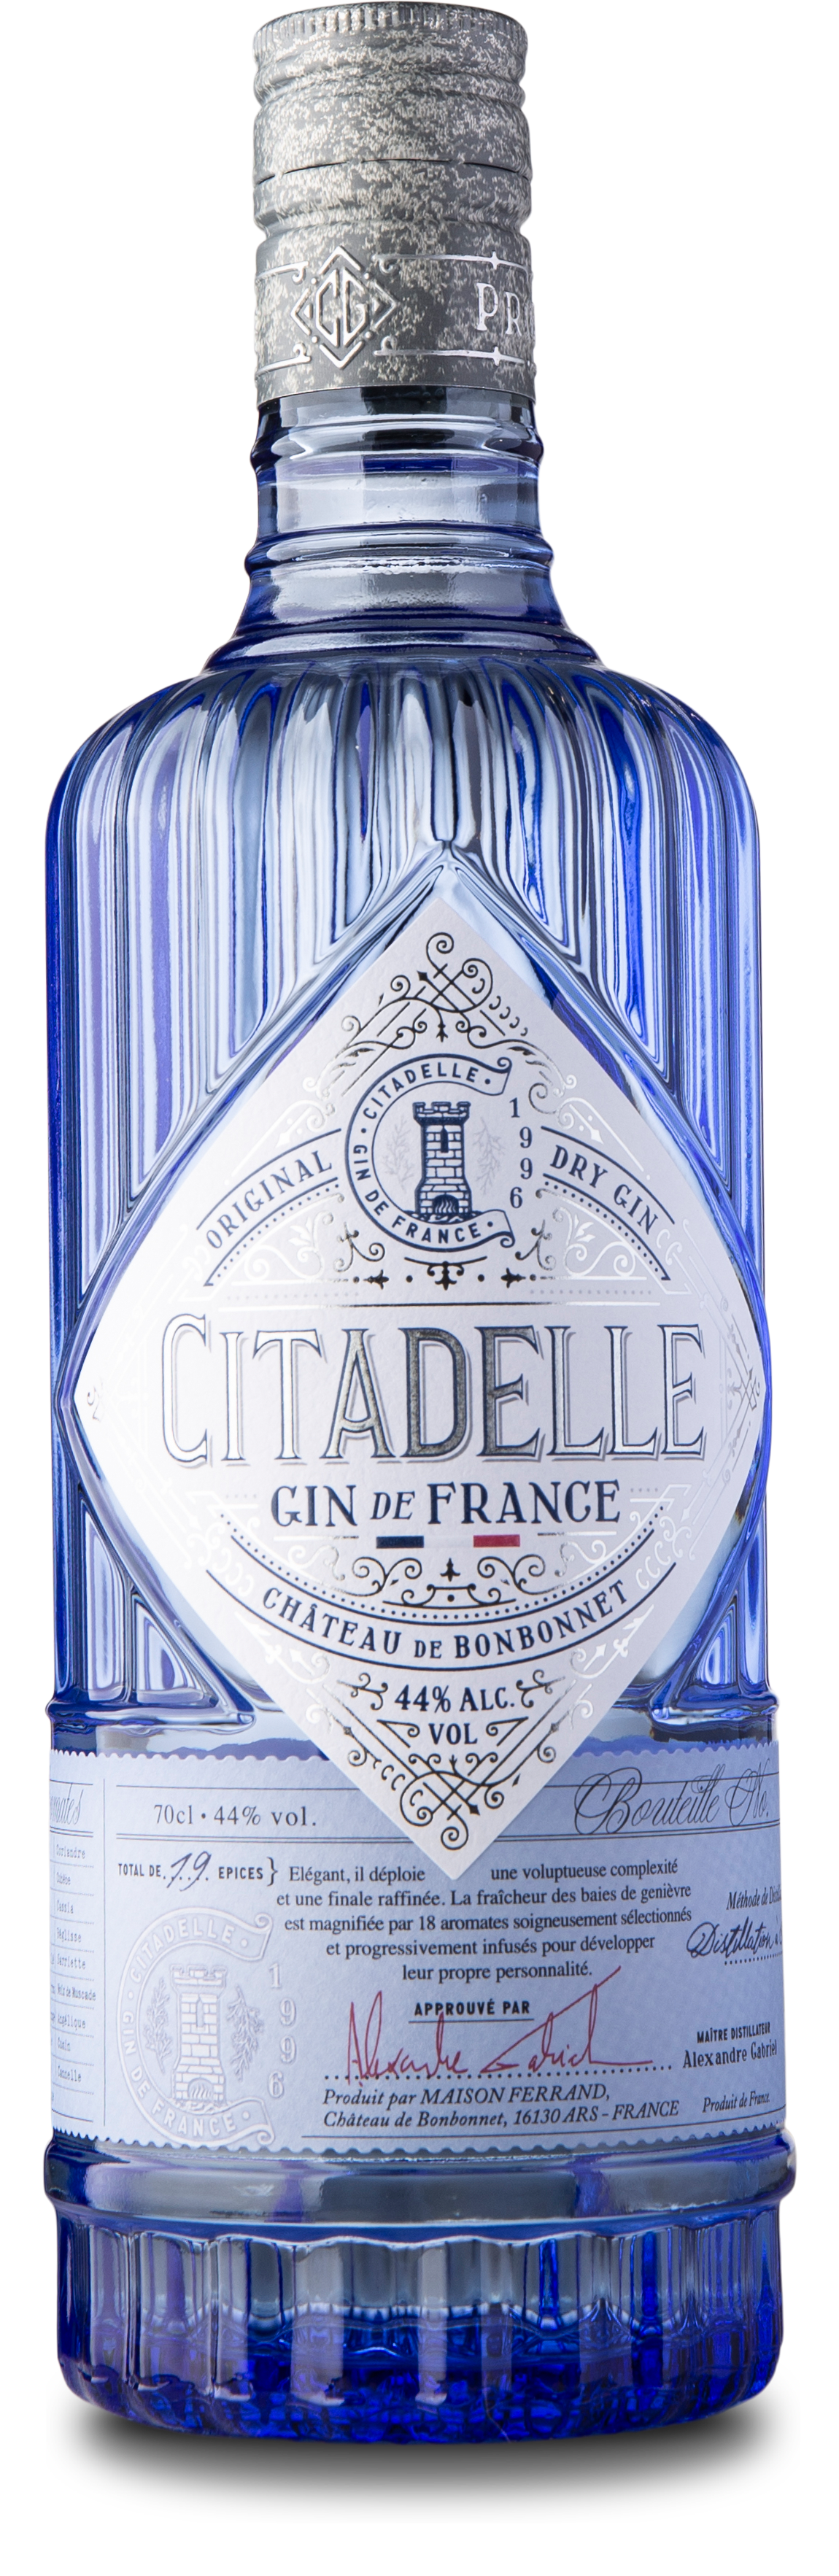 Køb Citadelle Gin 44%, 70 cl, Maison Ferrand her | Gin